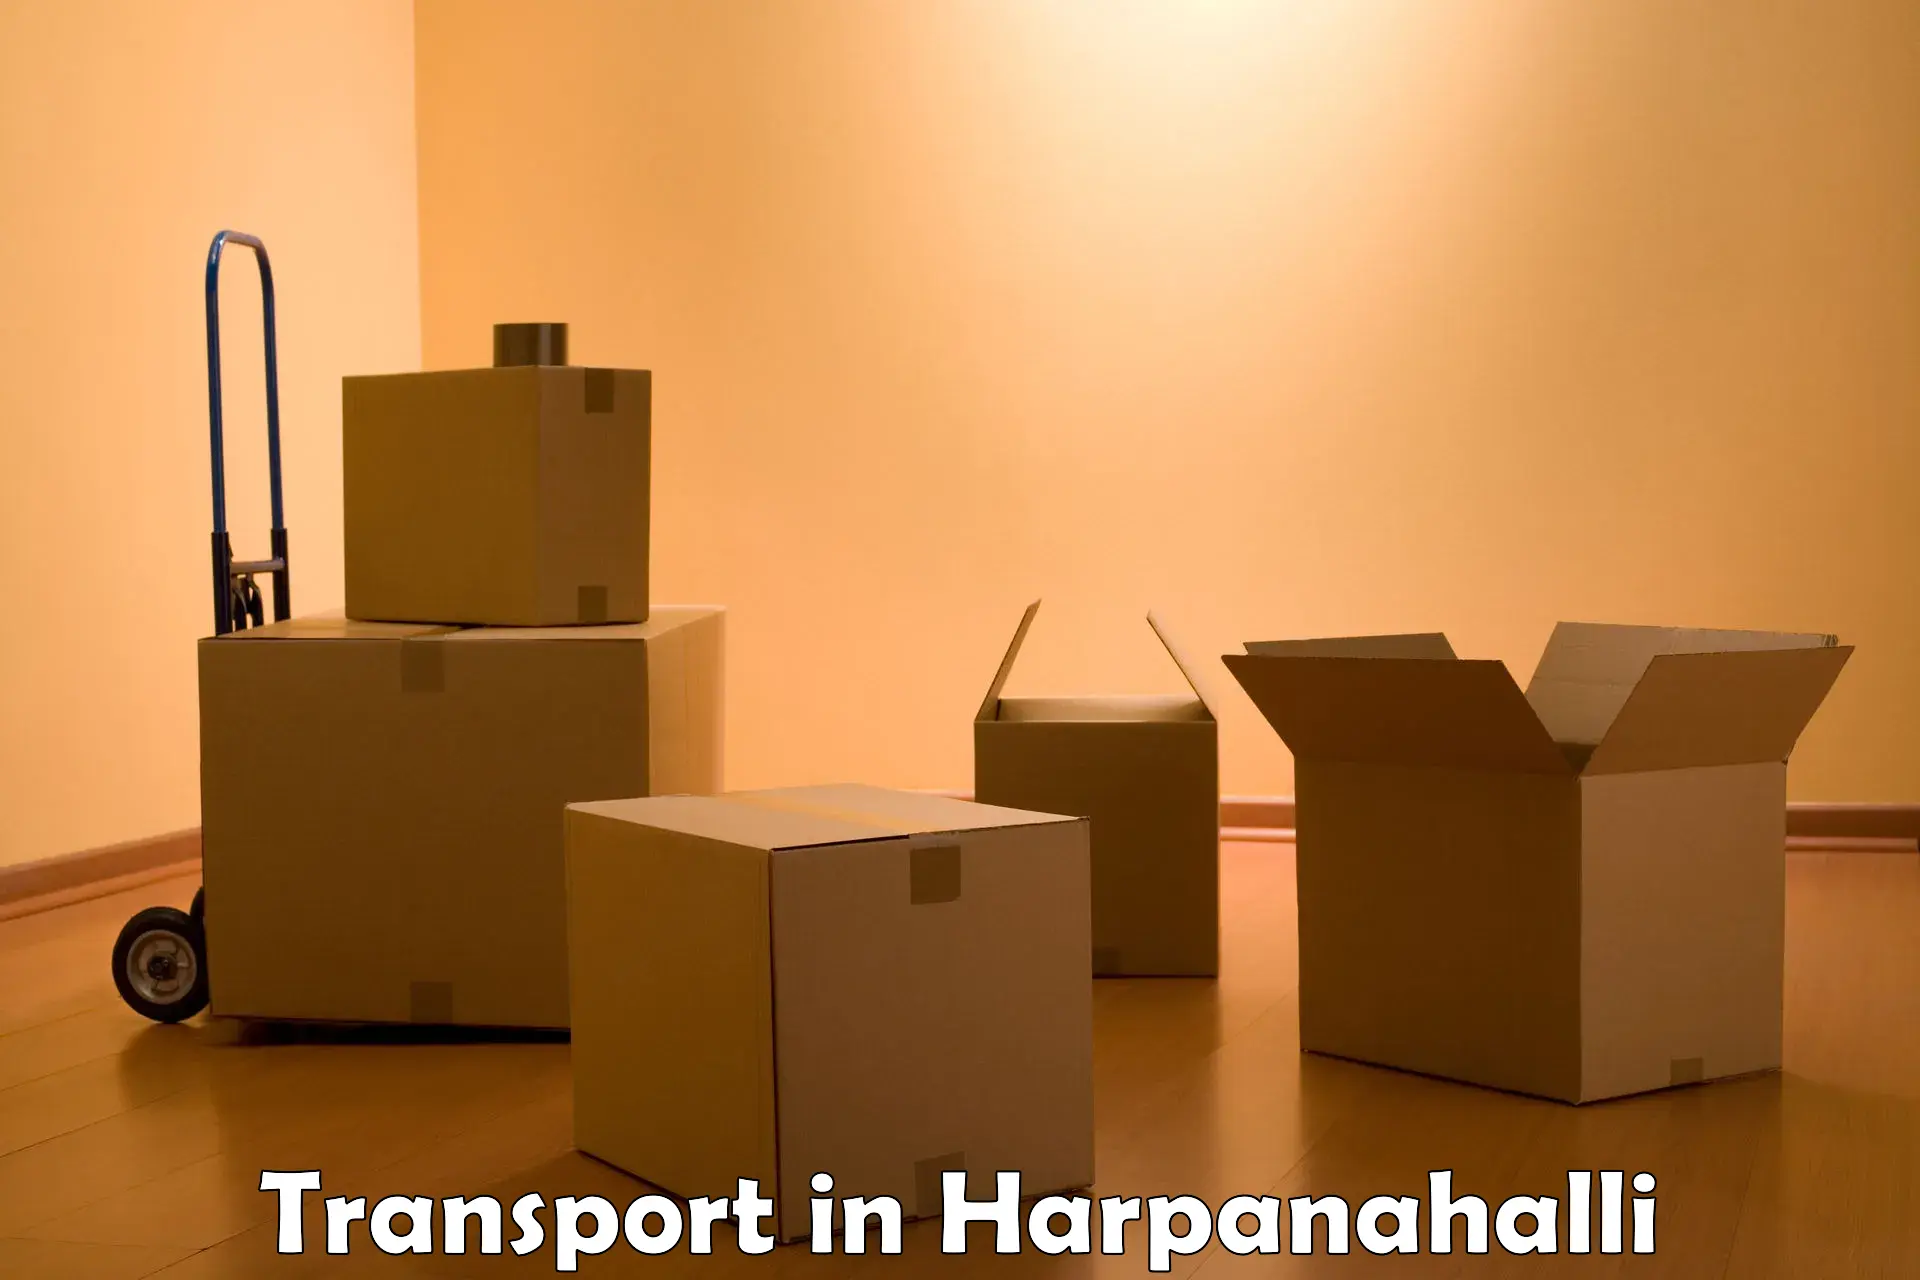 Online transport service in Harpanahalli